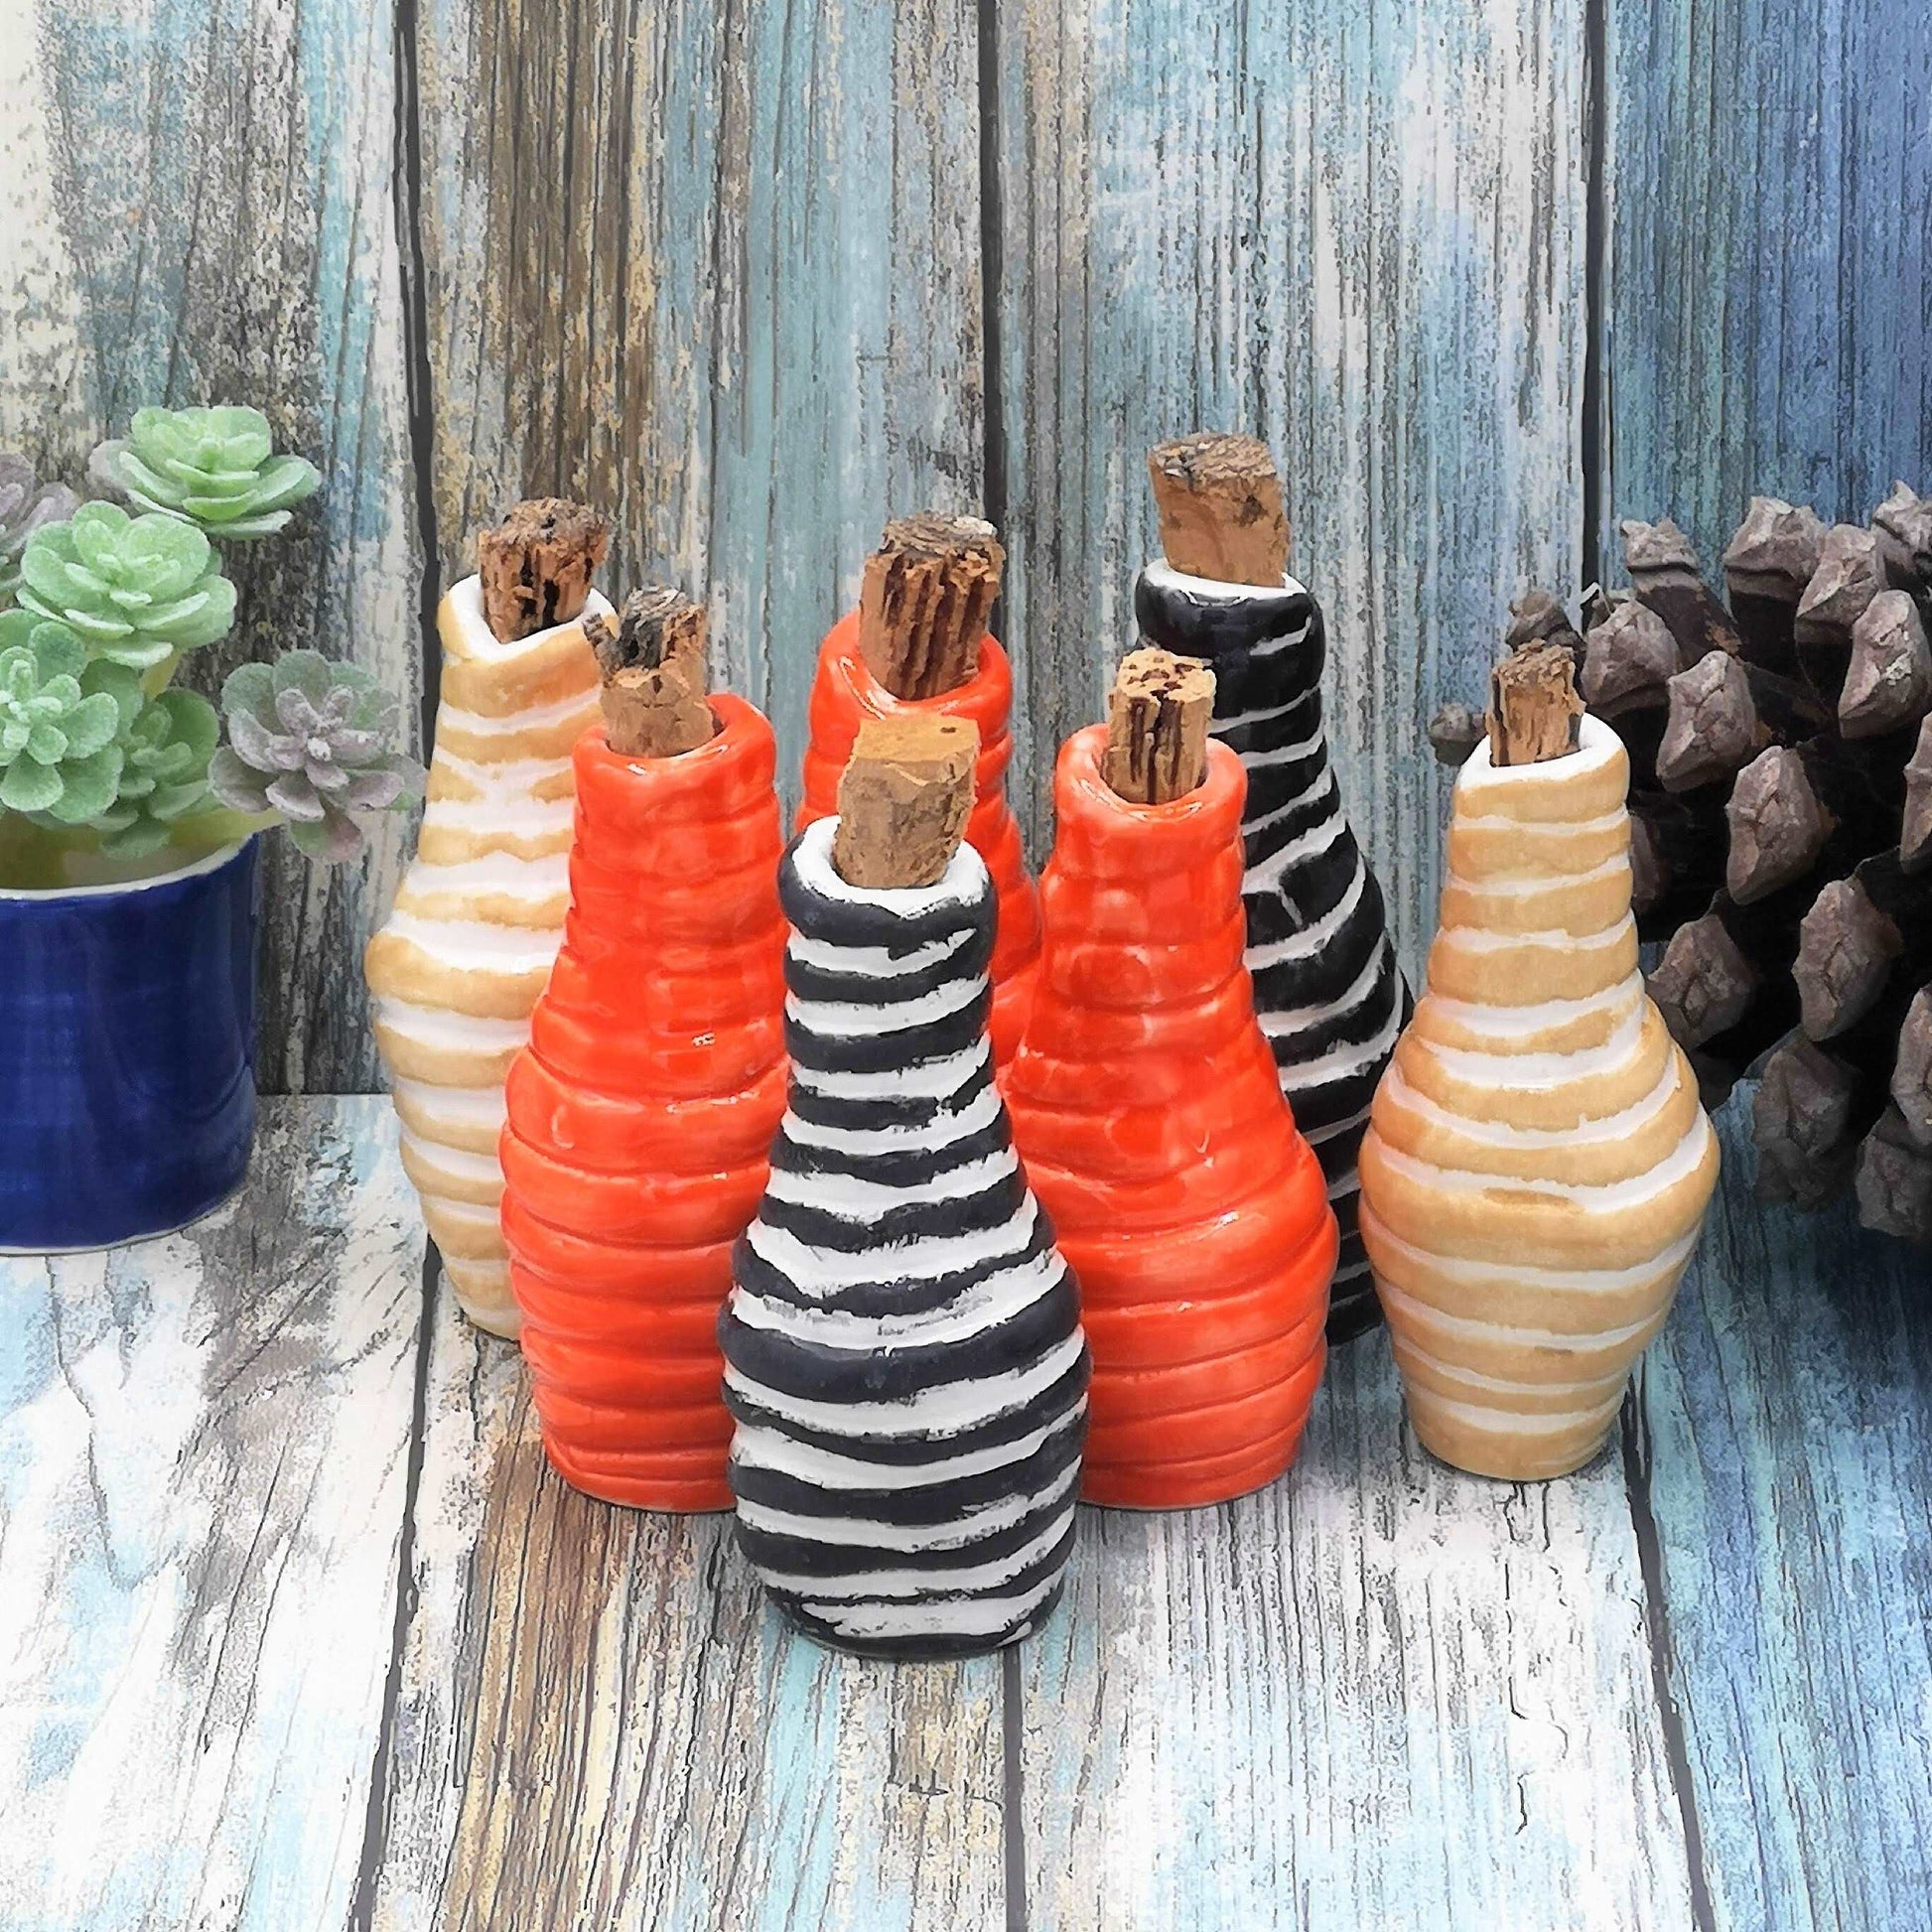 1Pc 85mm Handmade Ceramic Decorative Bottles, Cute Wedding Favors, Small Bottle Vase With Cork Stopper, Host Gift, Unique Tea Party Favors